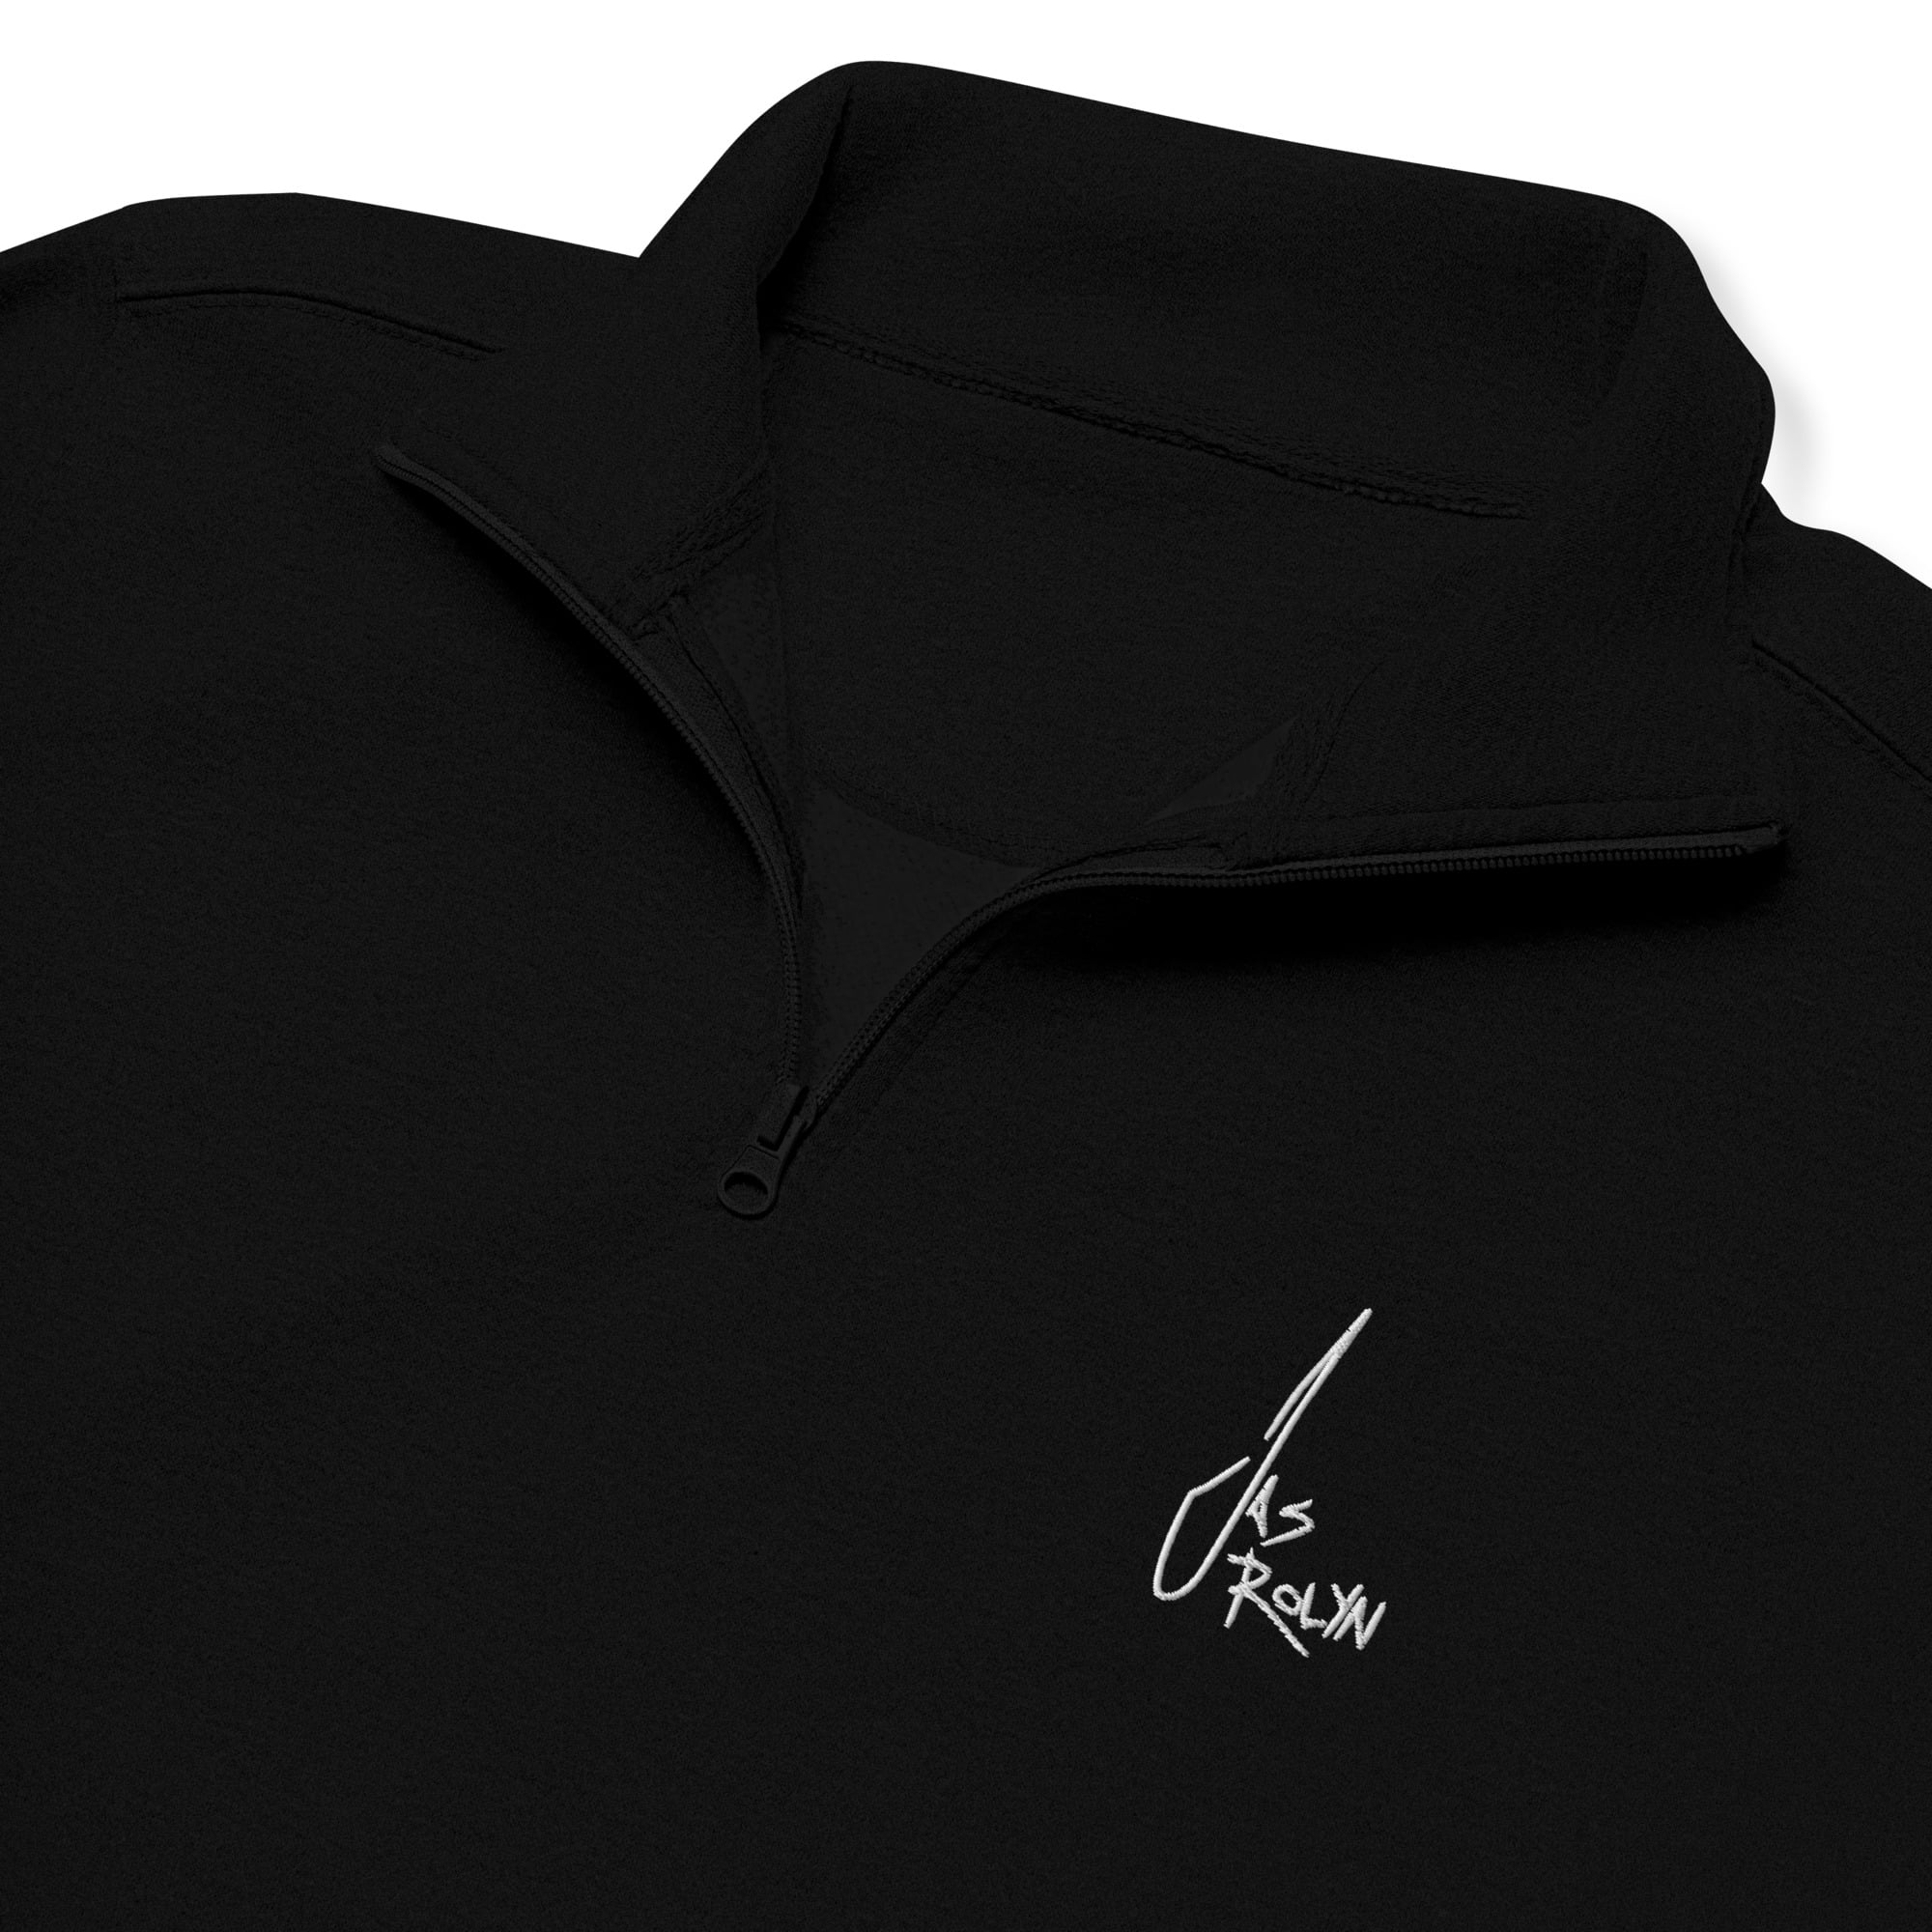 unisex fleece pullover black product details 64d2afe936e3a.jpg